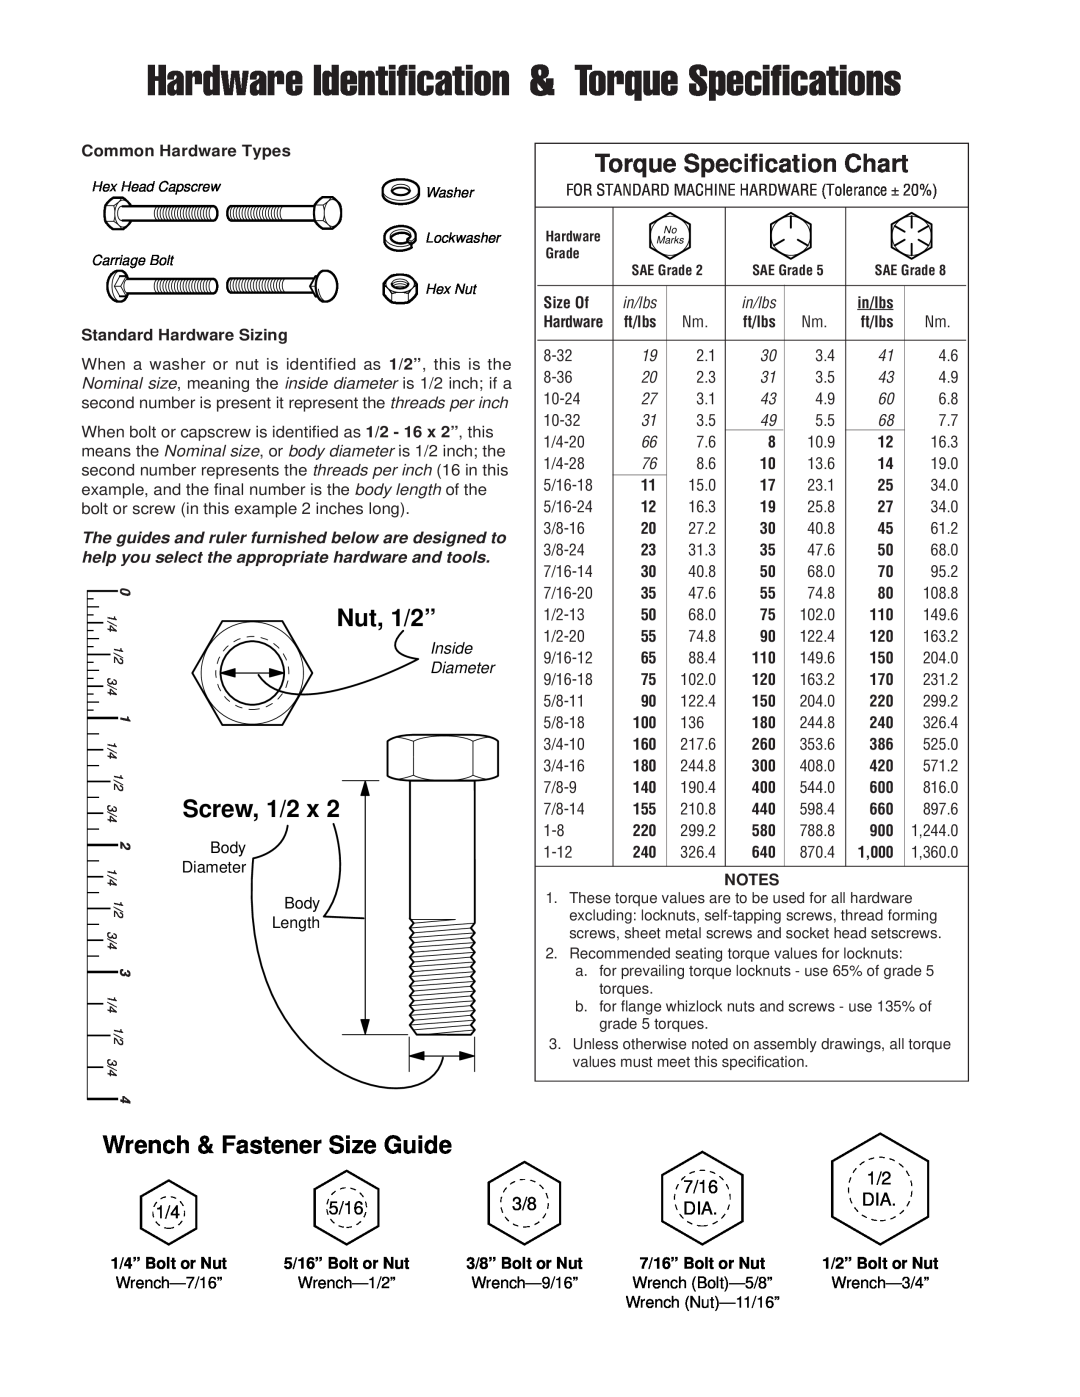 Simplicity 1694306 Hardware Identification & Torque Specifications, Torque Specification Chart, Nut, 1/2”, Screw, 1/2 x 